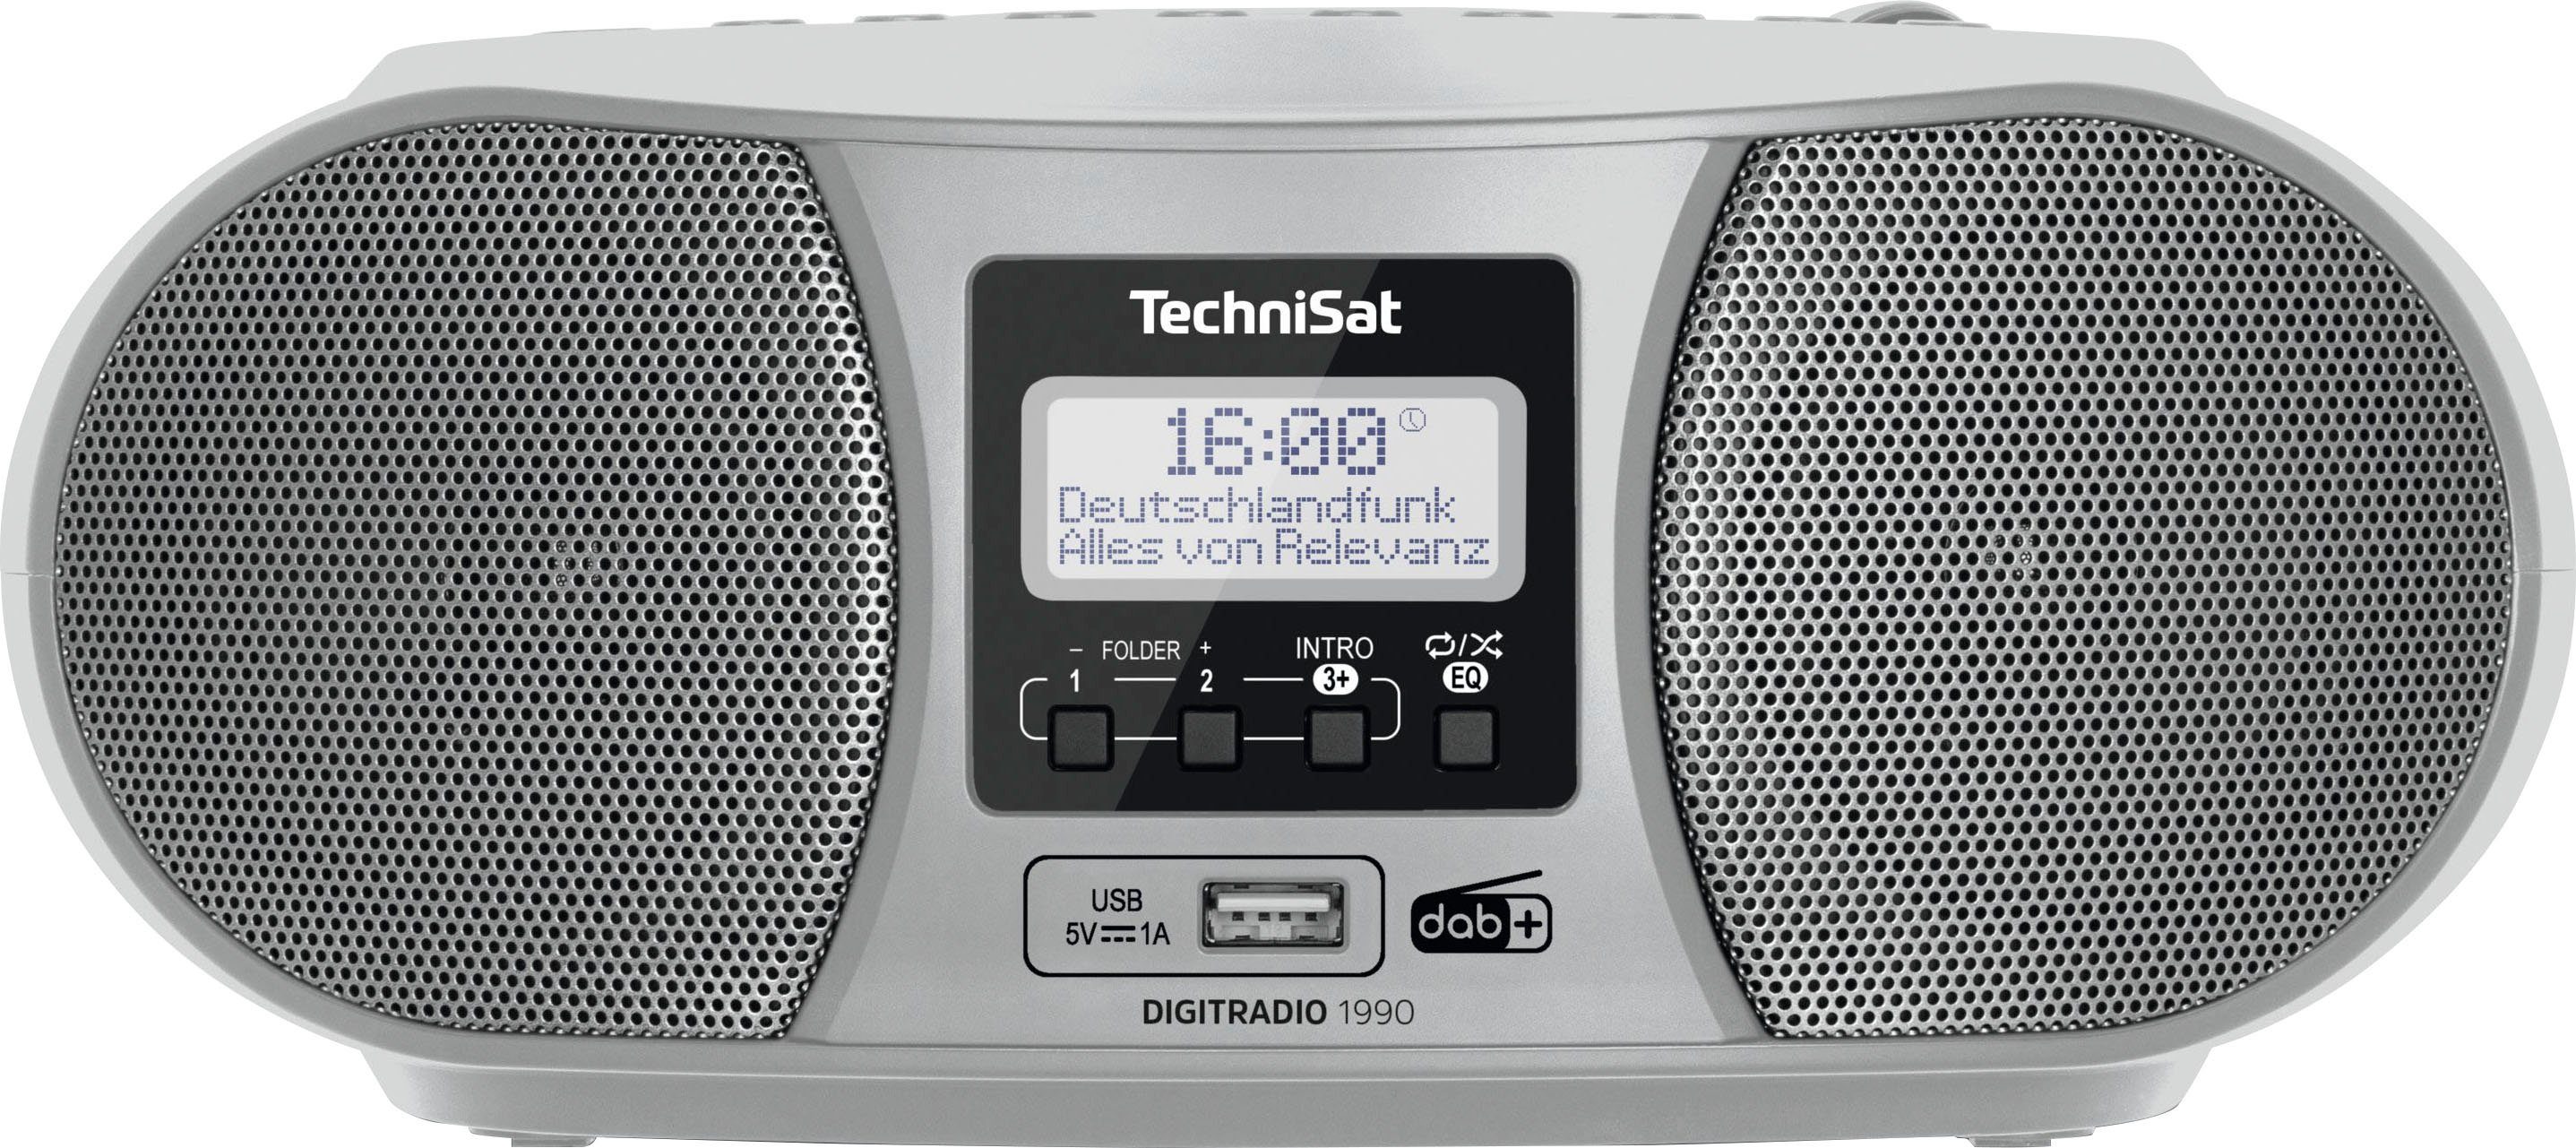 mit CD-Player) (DAB) RDS, UKW 1990 3 (Digitalradio (DAB), W, DIGITRADIO silber TechniSat Digitalradio